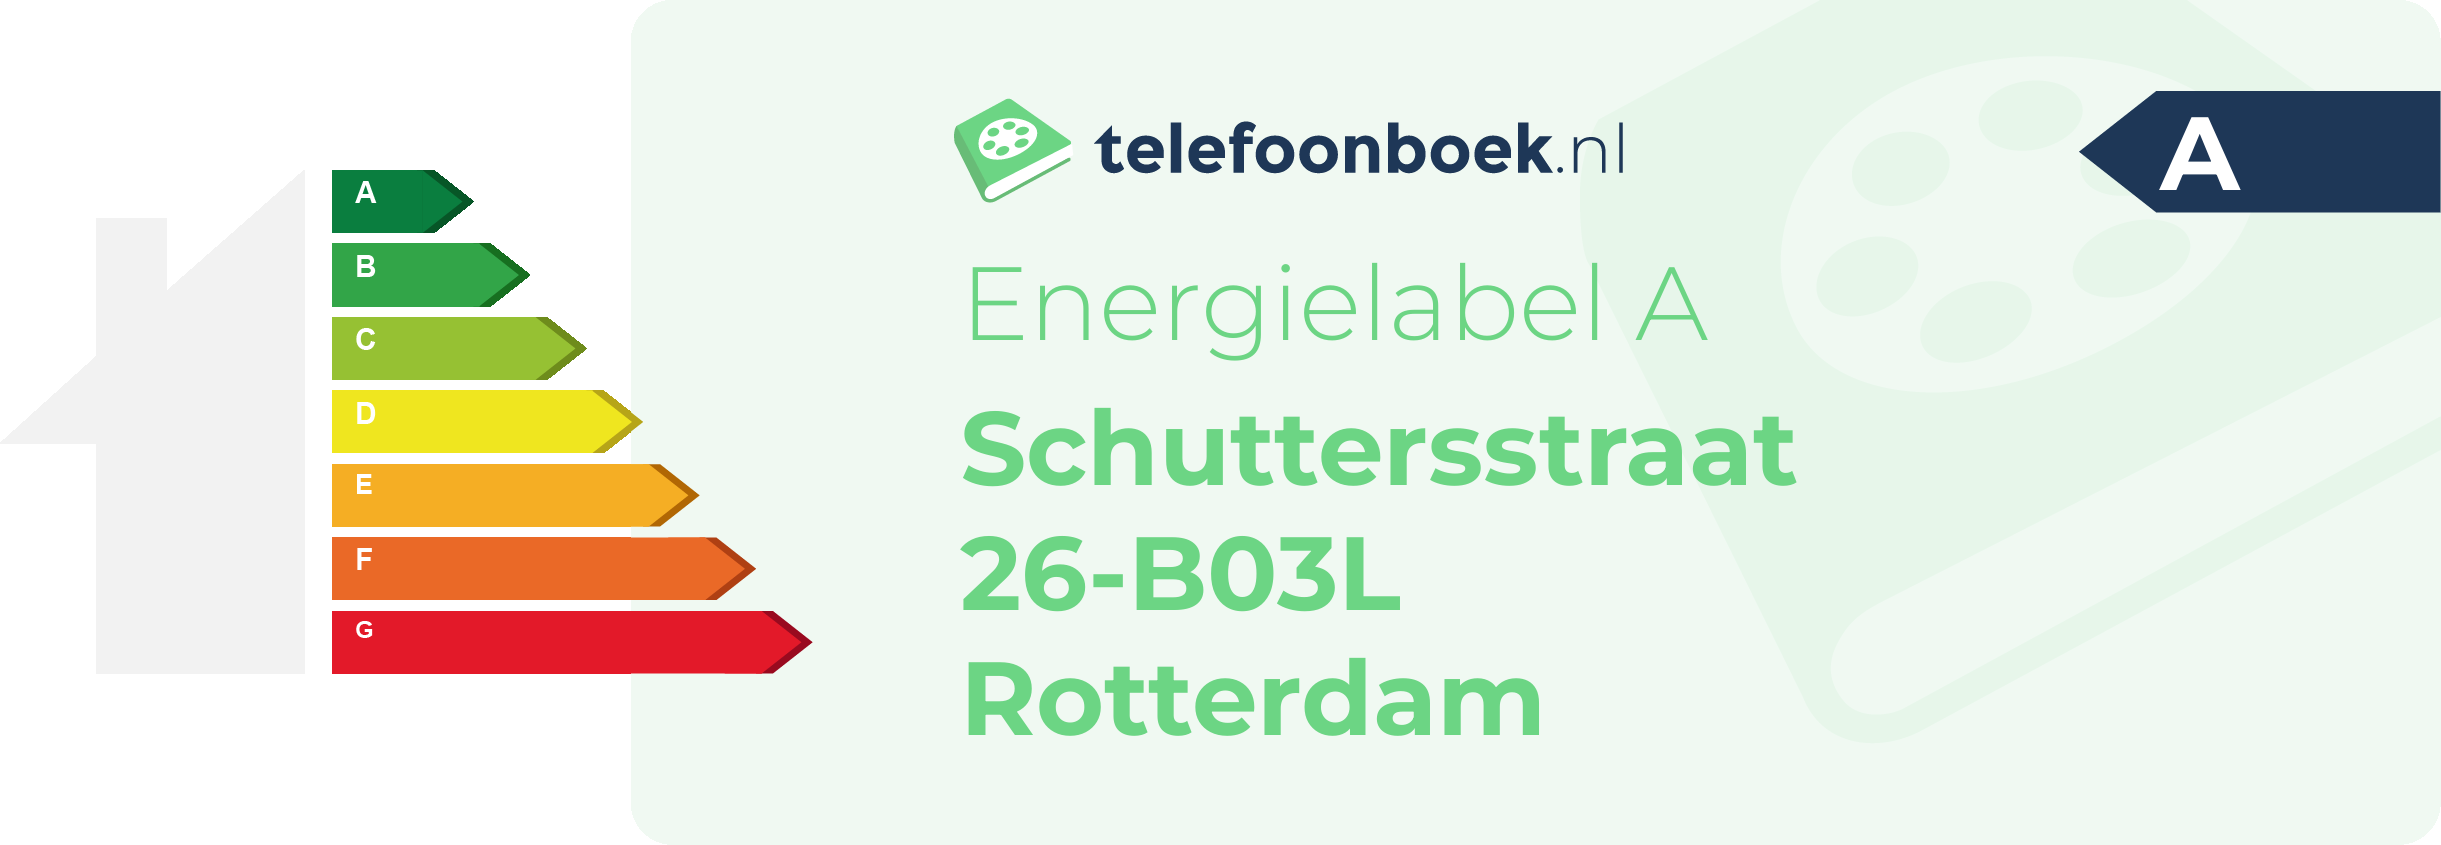 Energielabel Schuttersstraat 26-B03L Rotterdam